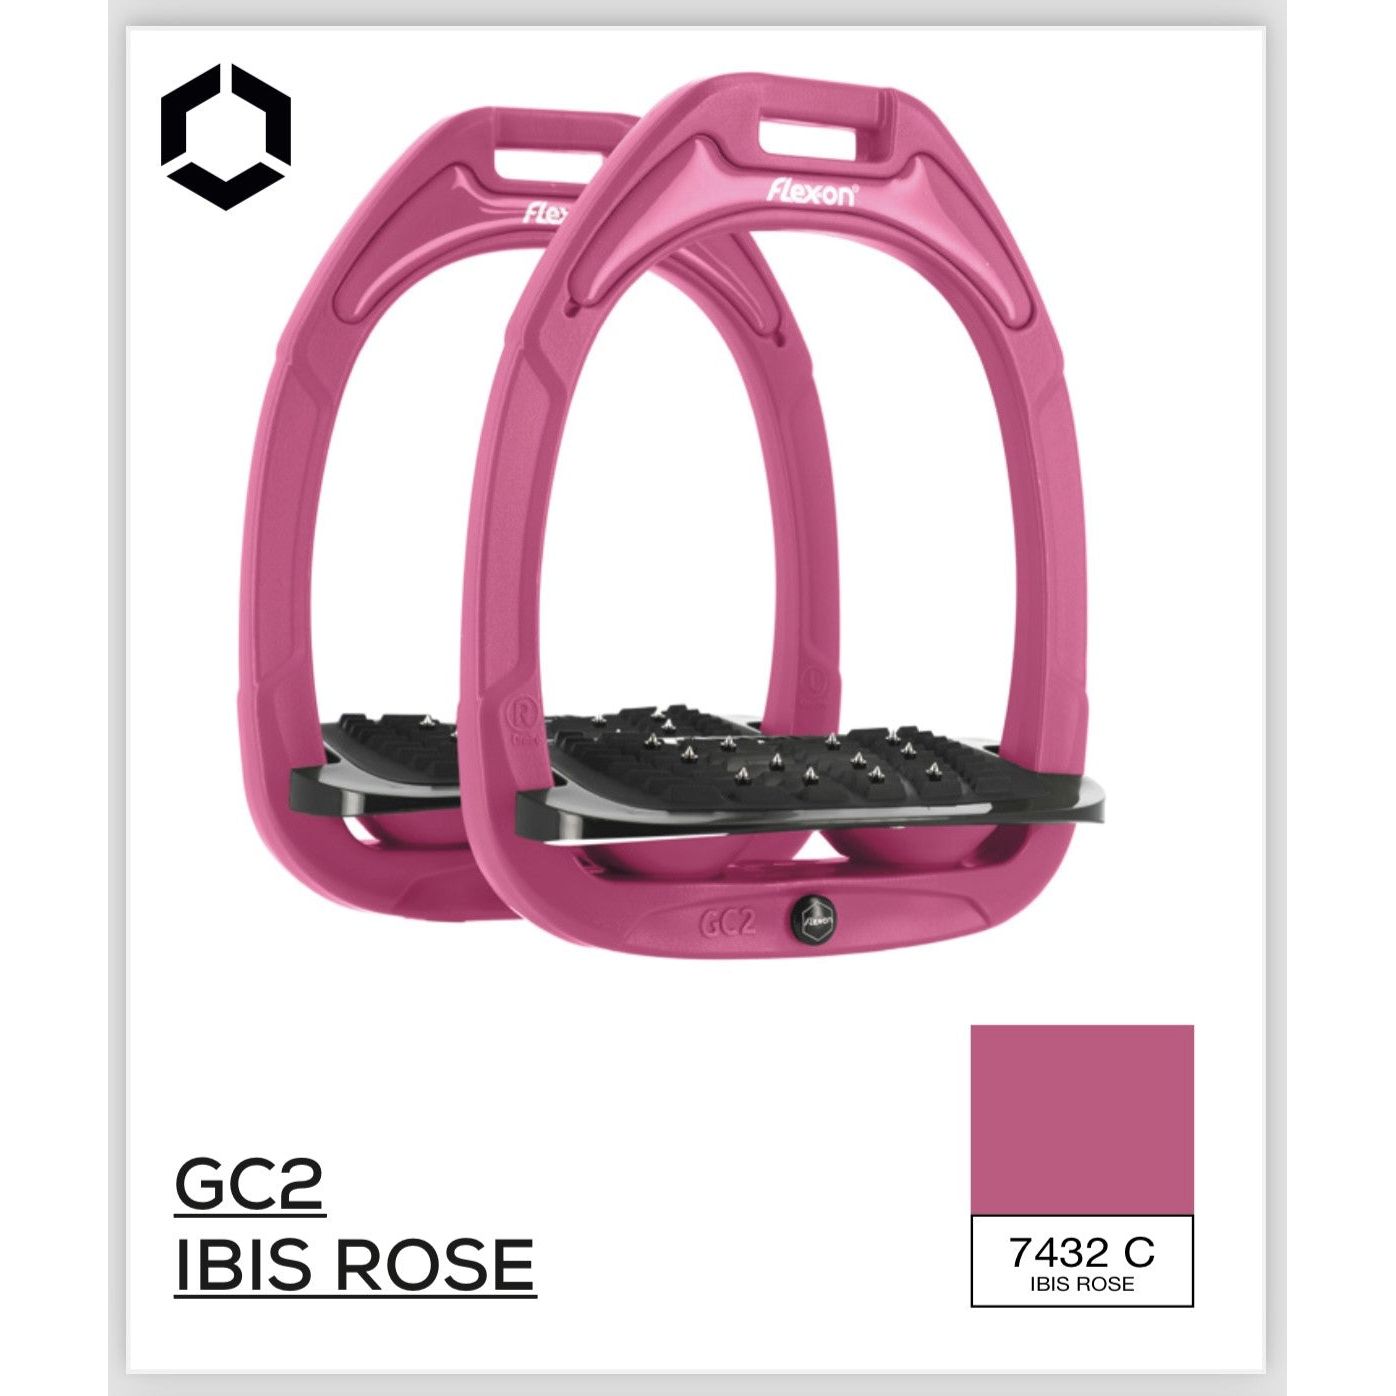 Flex-On Green Composite Stirrups - Limited Edition 'Ibis Rose'